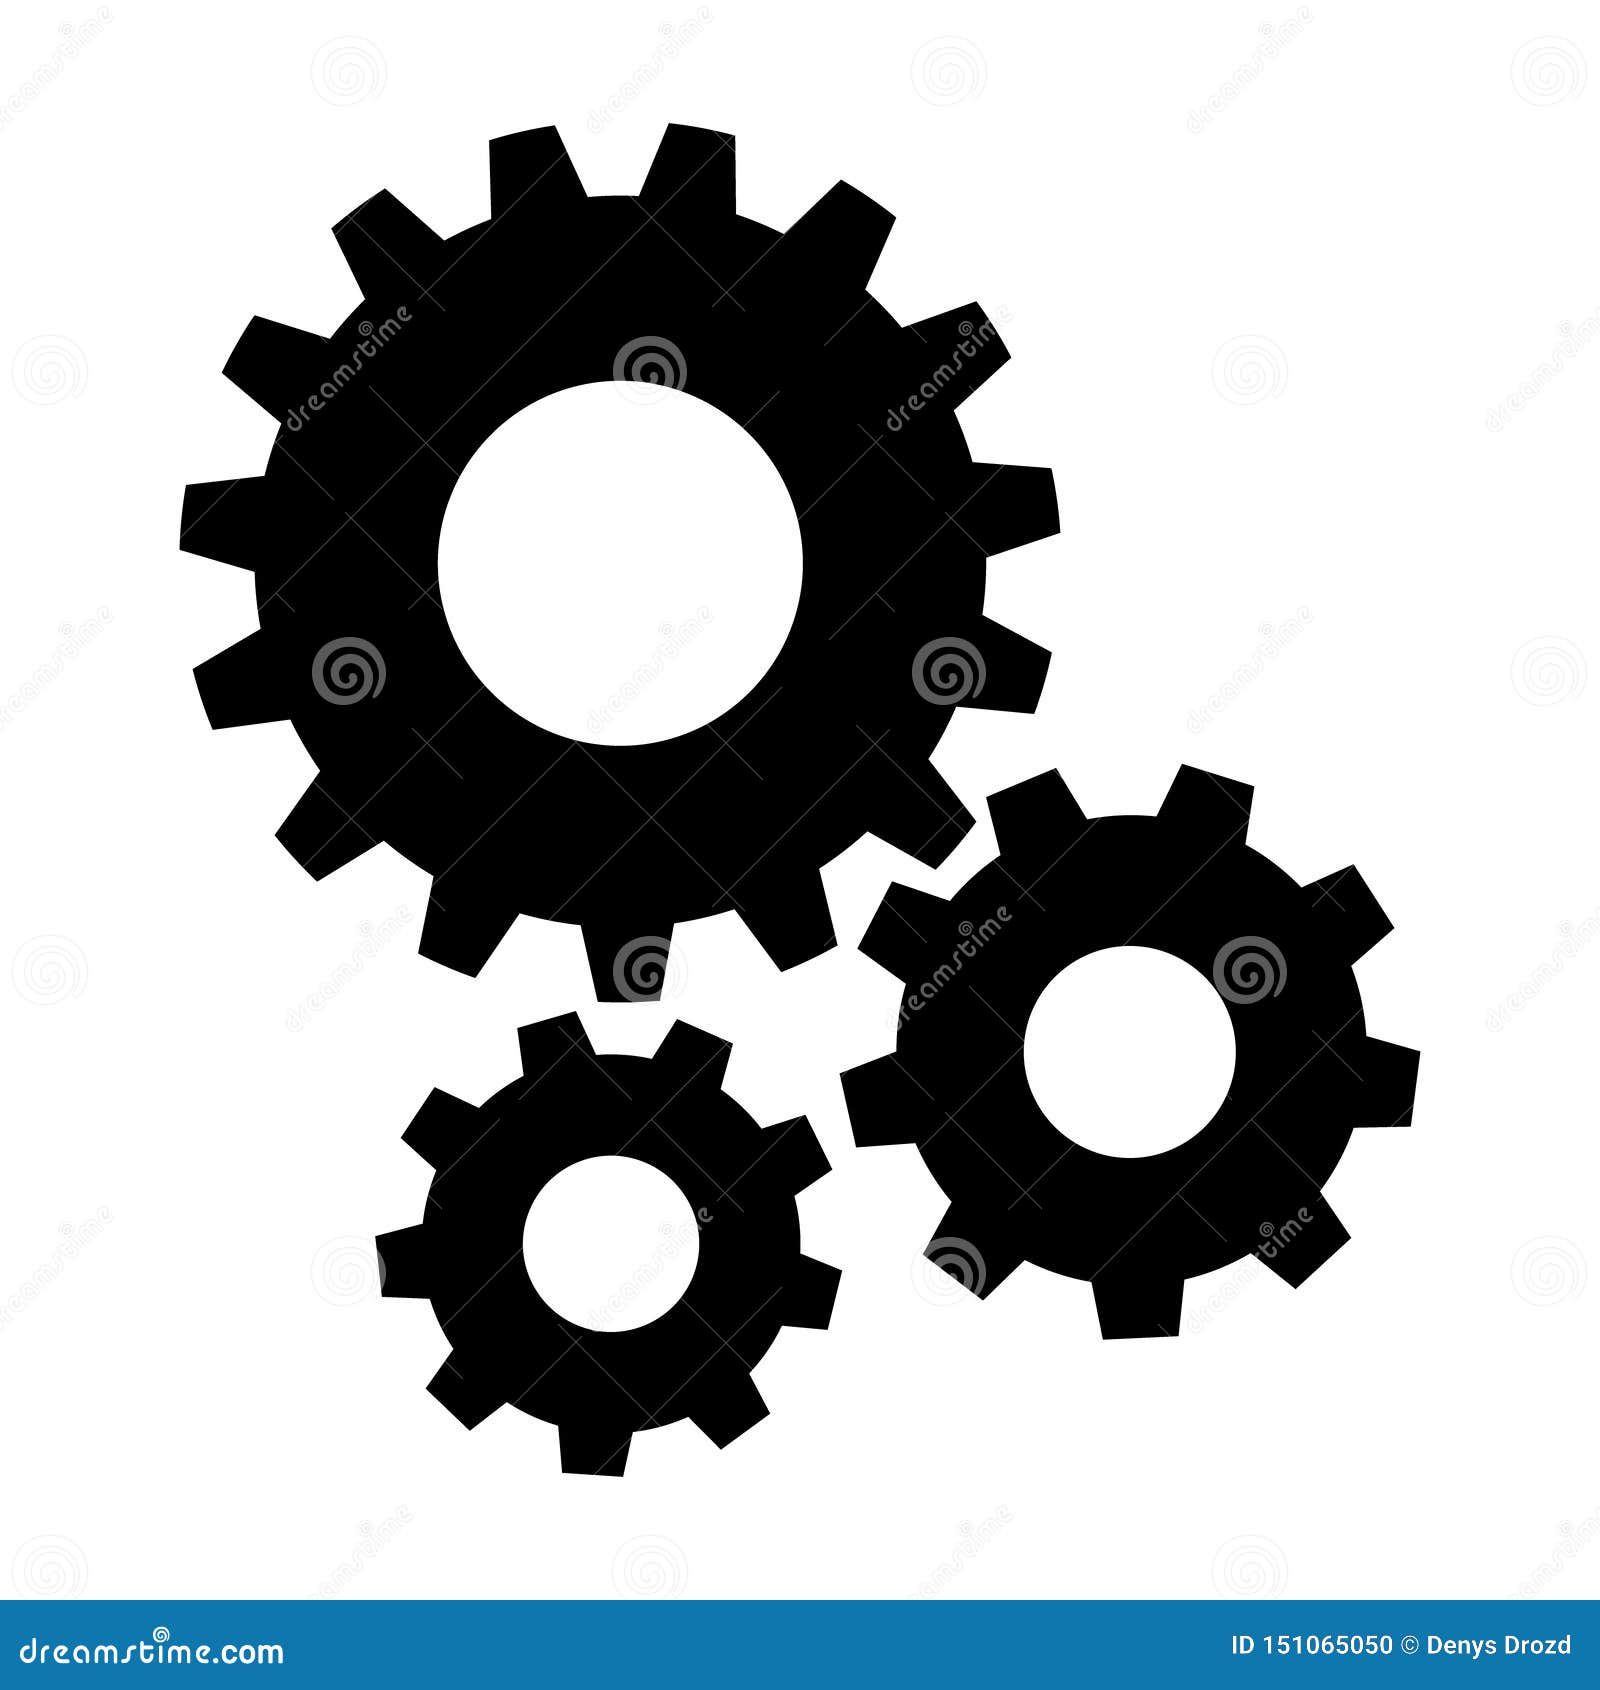 Settings Icon, Gear Icon Vector, Gear Symbol Illustration. for Web